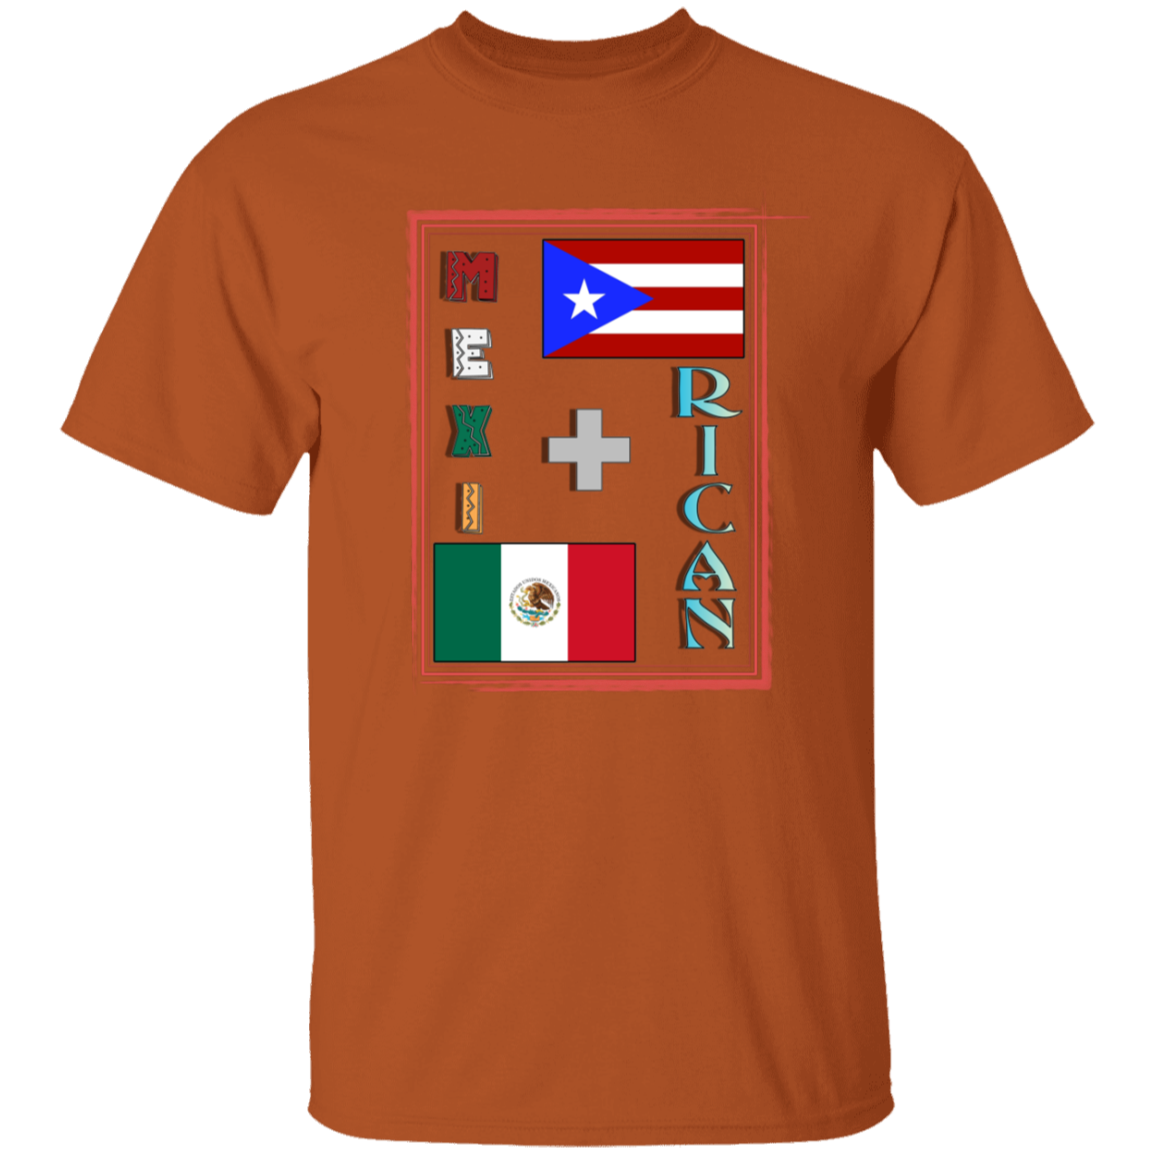 Mexi + Rican 5.3 oz. T-Shirt - Puerto Rican Pride